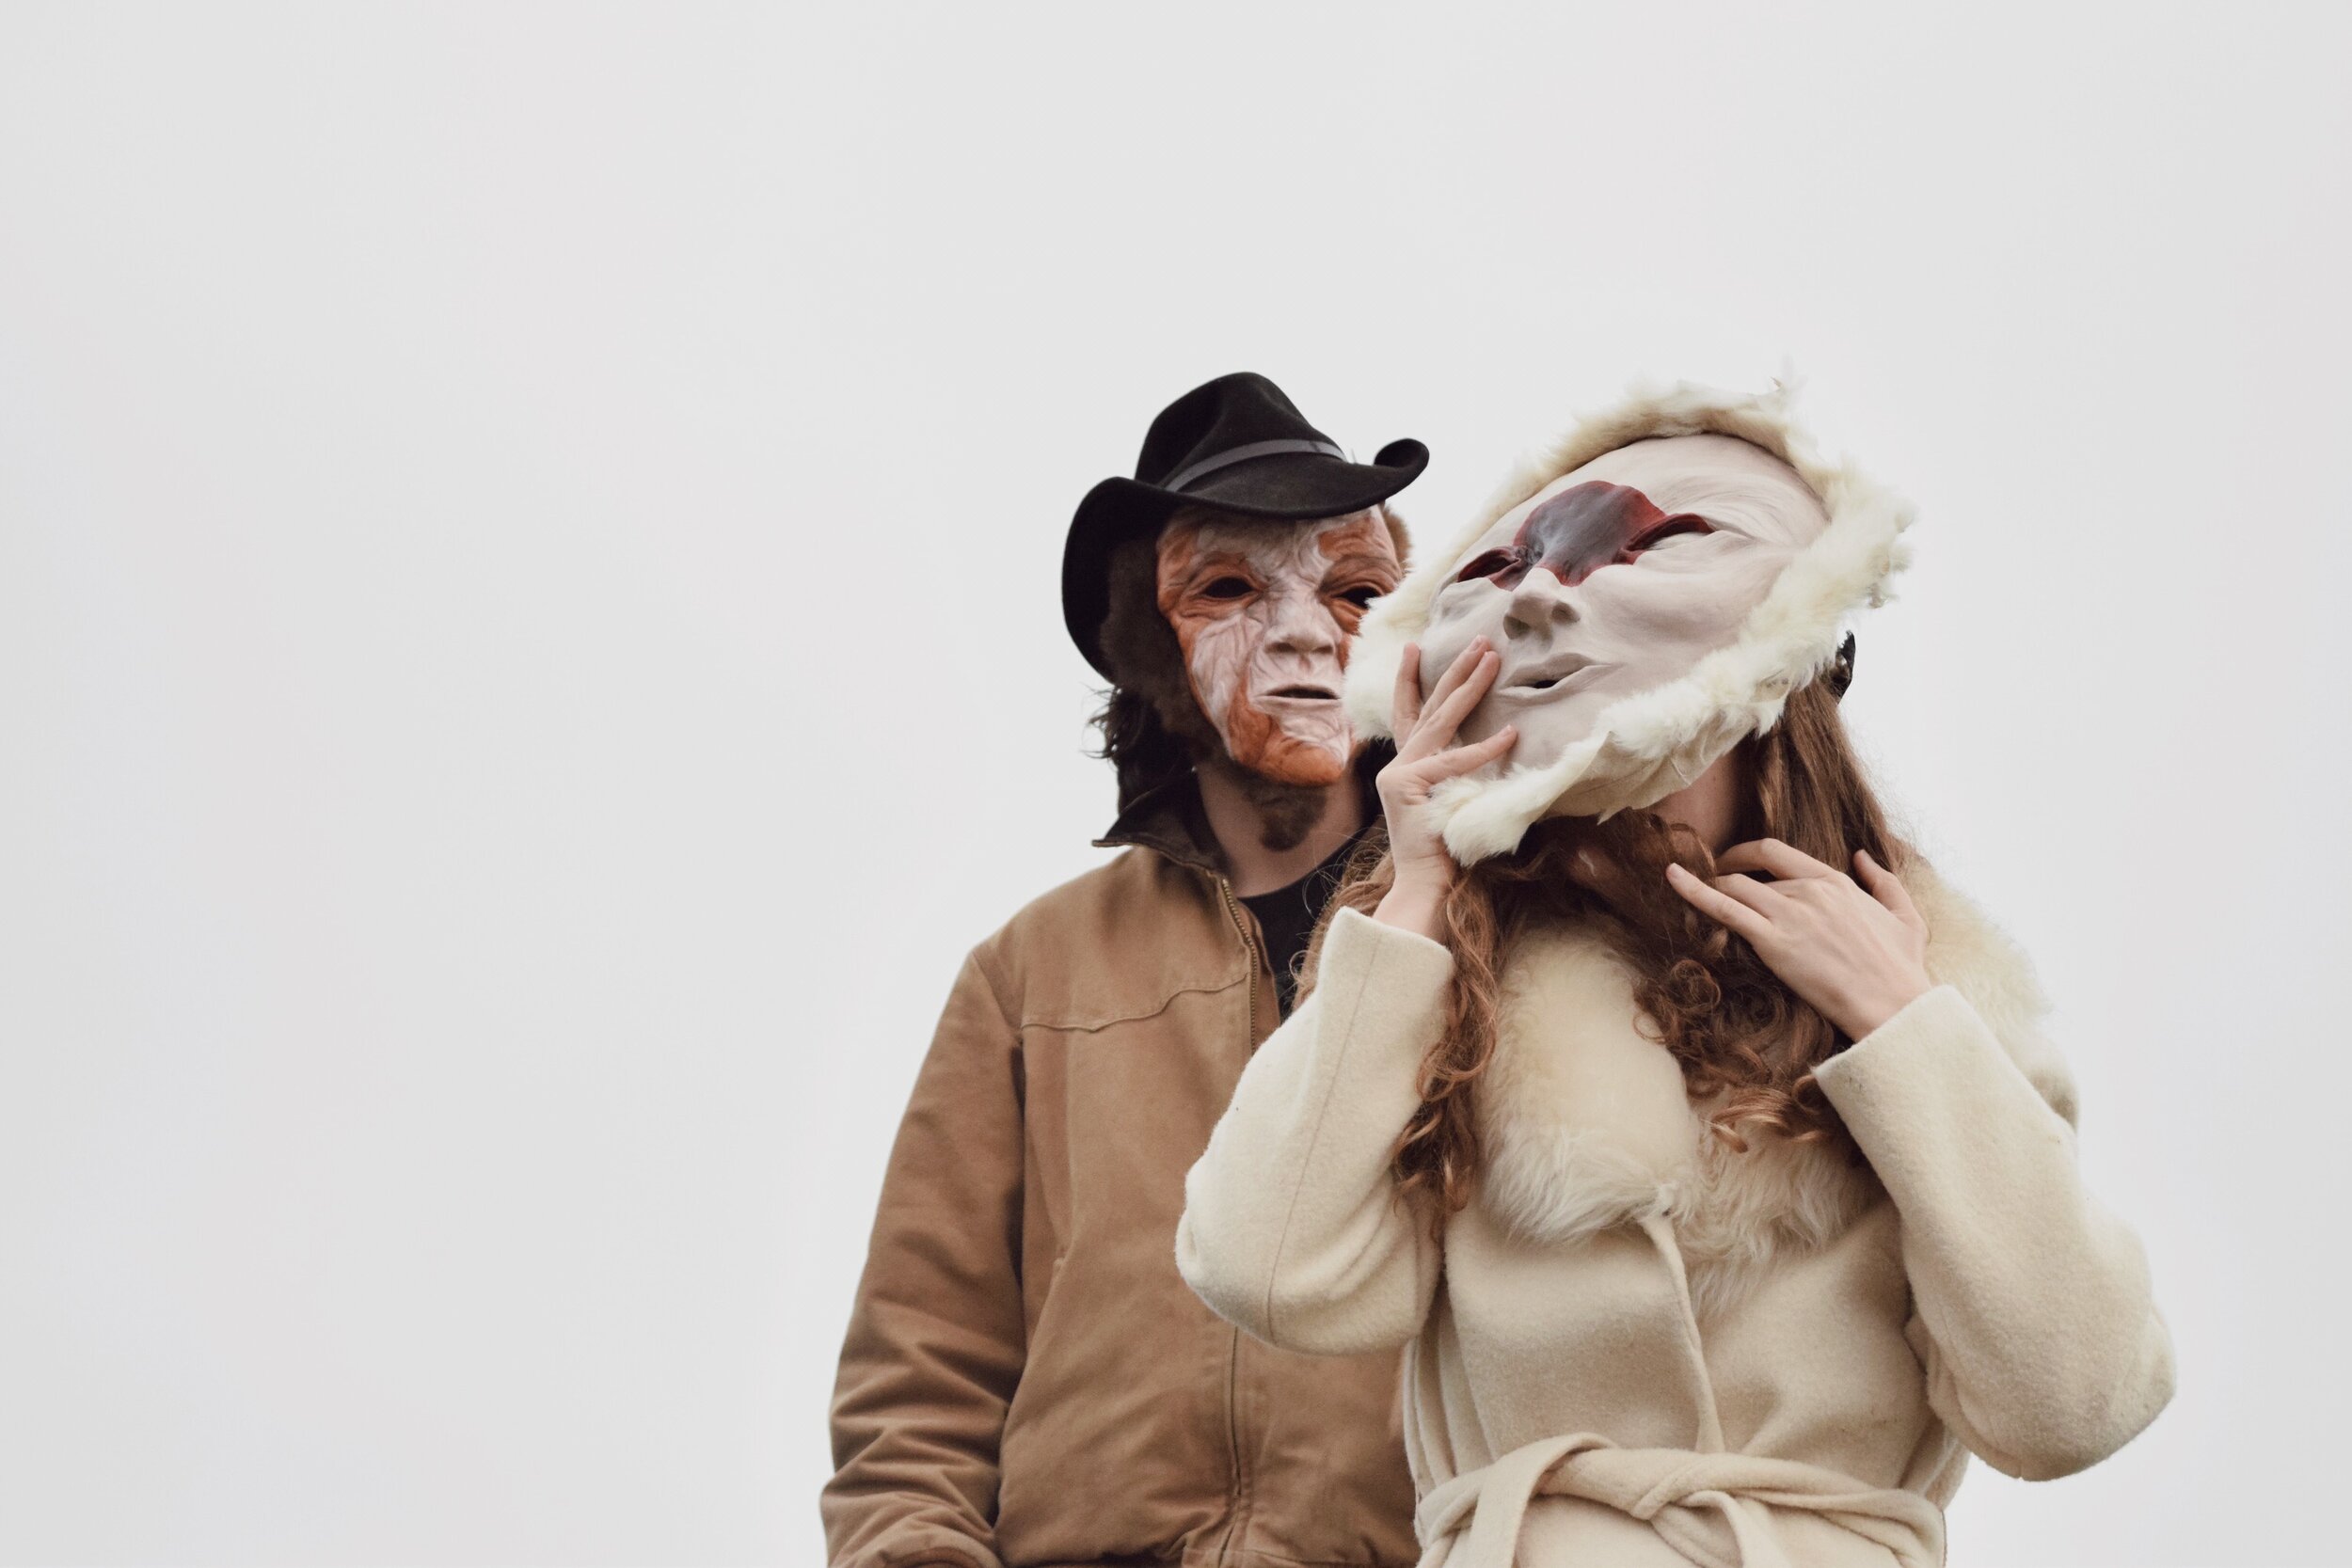  Ceramic masks, acrylic paint, ink, salvaged fur coat. Photo and concept: Rachel Pozivenec. 2015 